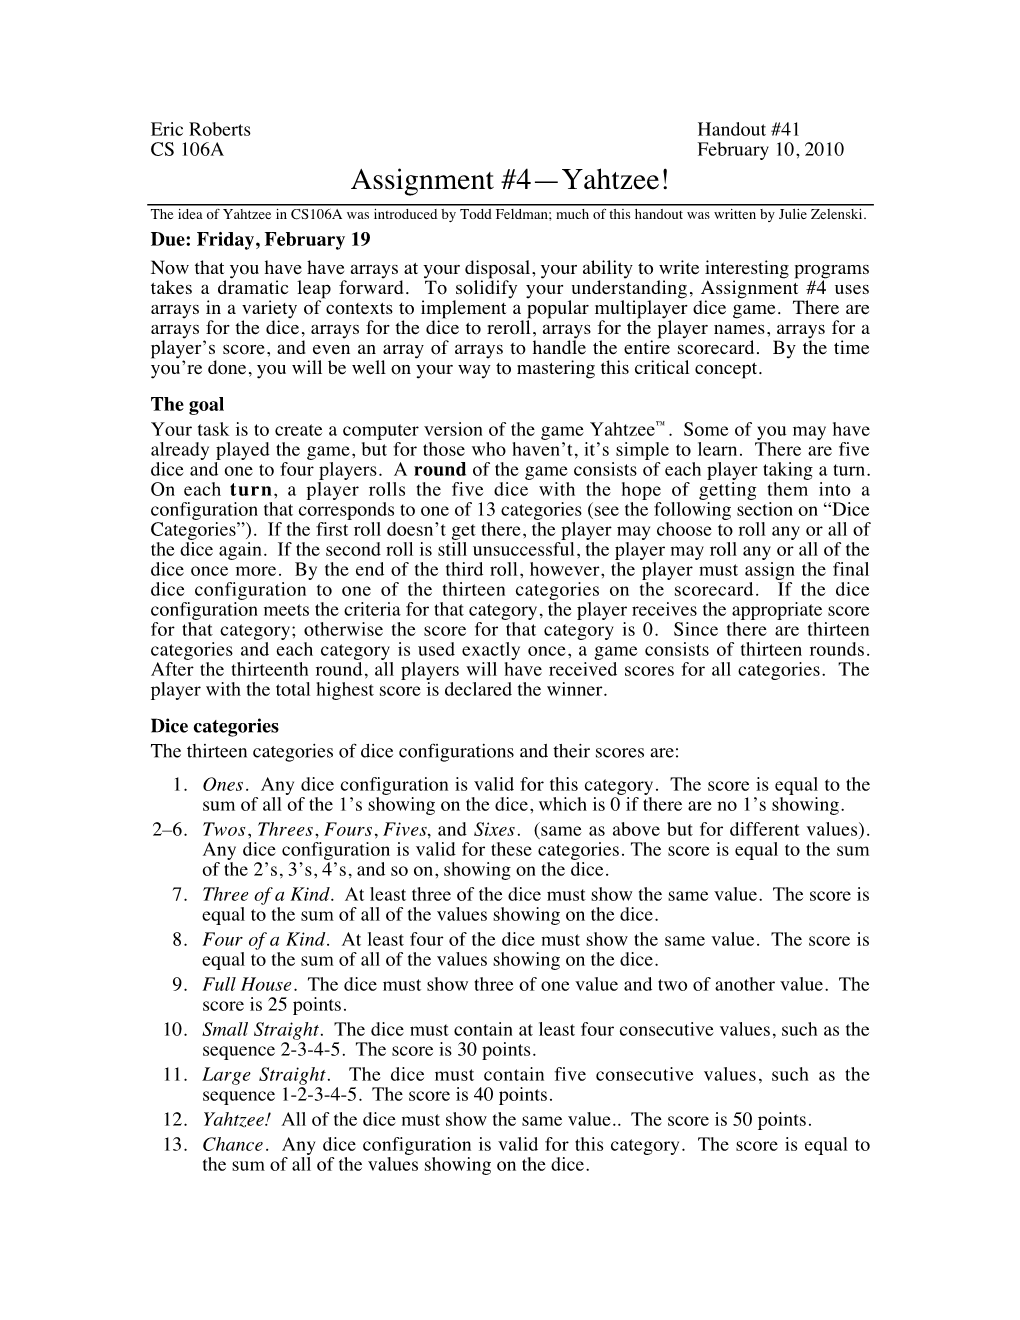 Assignment #4—Yahtzee! the Idea of Yahtzee in CS106A Was Introduced by Todd Feldman; Much of This Handout Was Written by Julie Zelenski